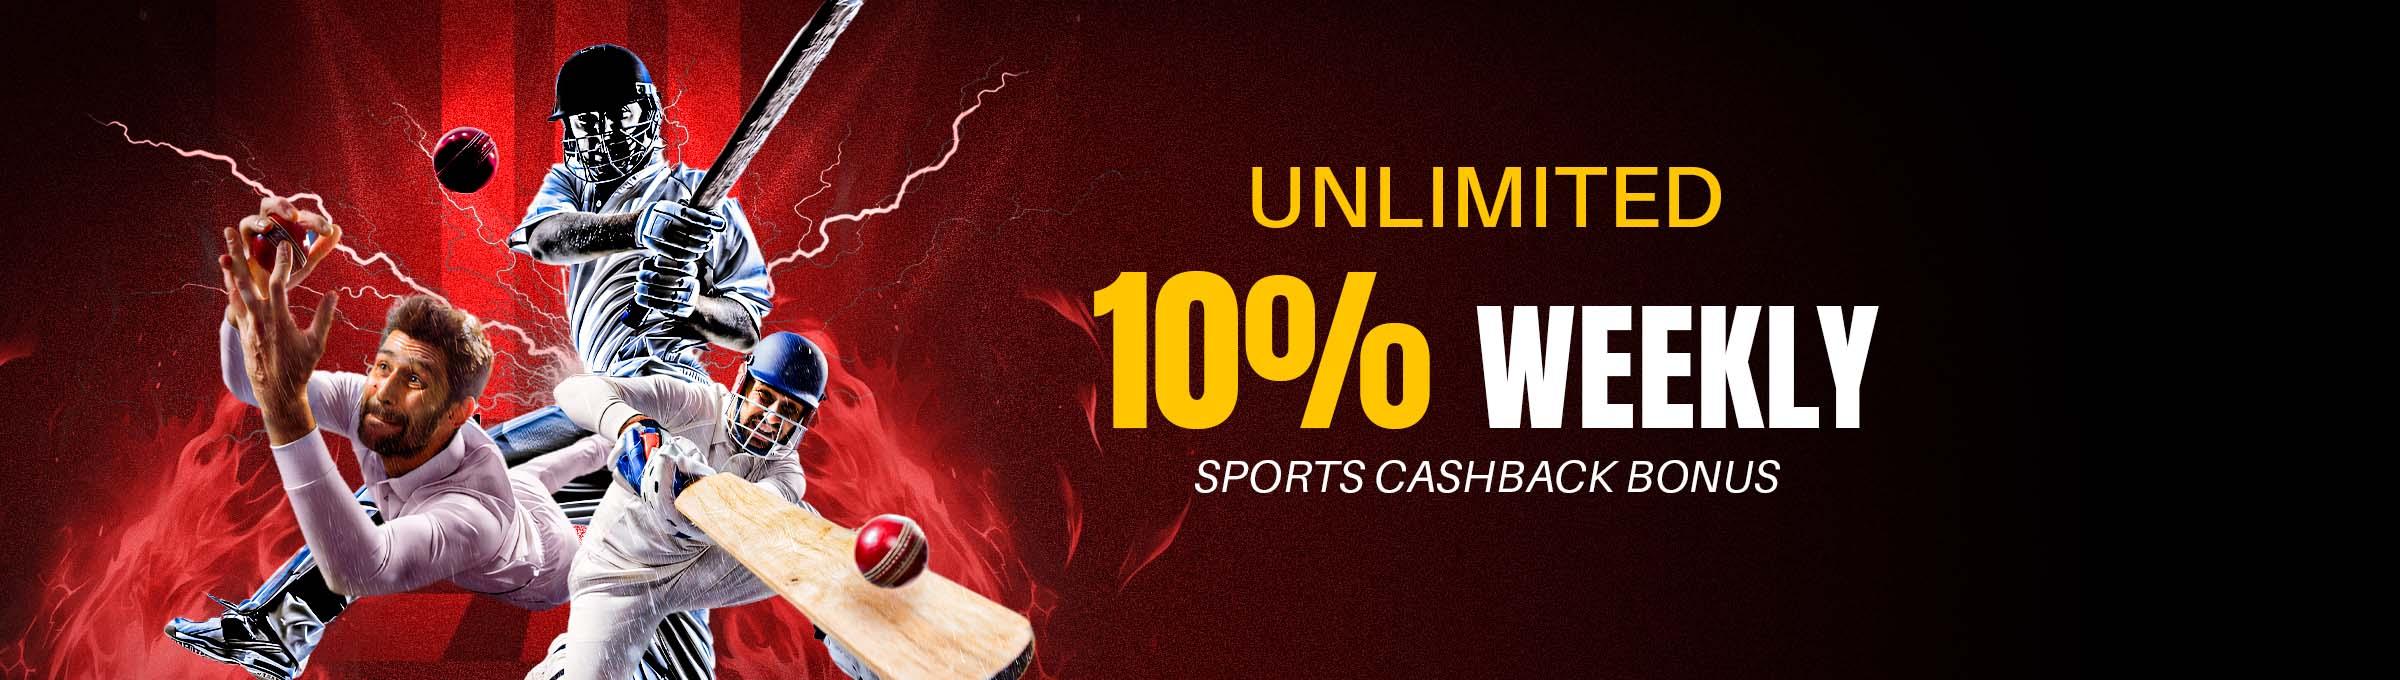 10% Weekly UNLIMITED Sports Cashback Bonus